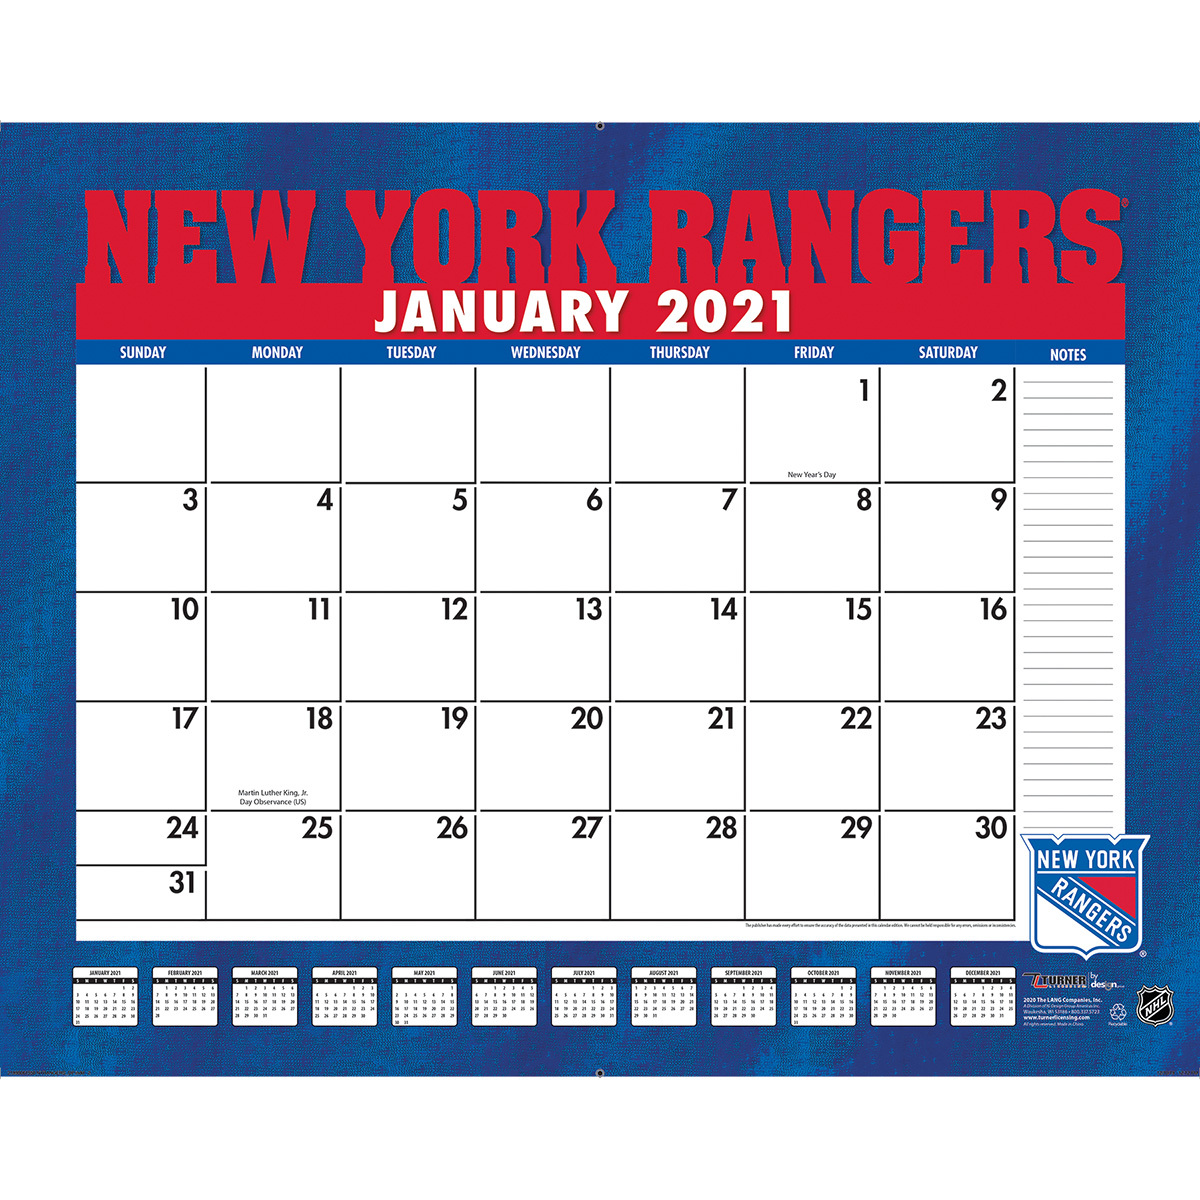 NEW YORK RANGERS 2021 22X17 DESK CALENDAR new york rangers LANG